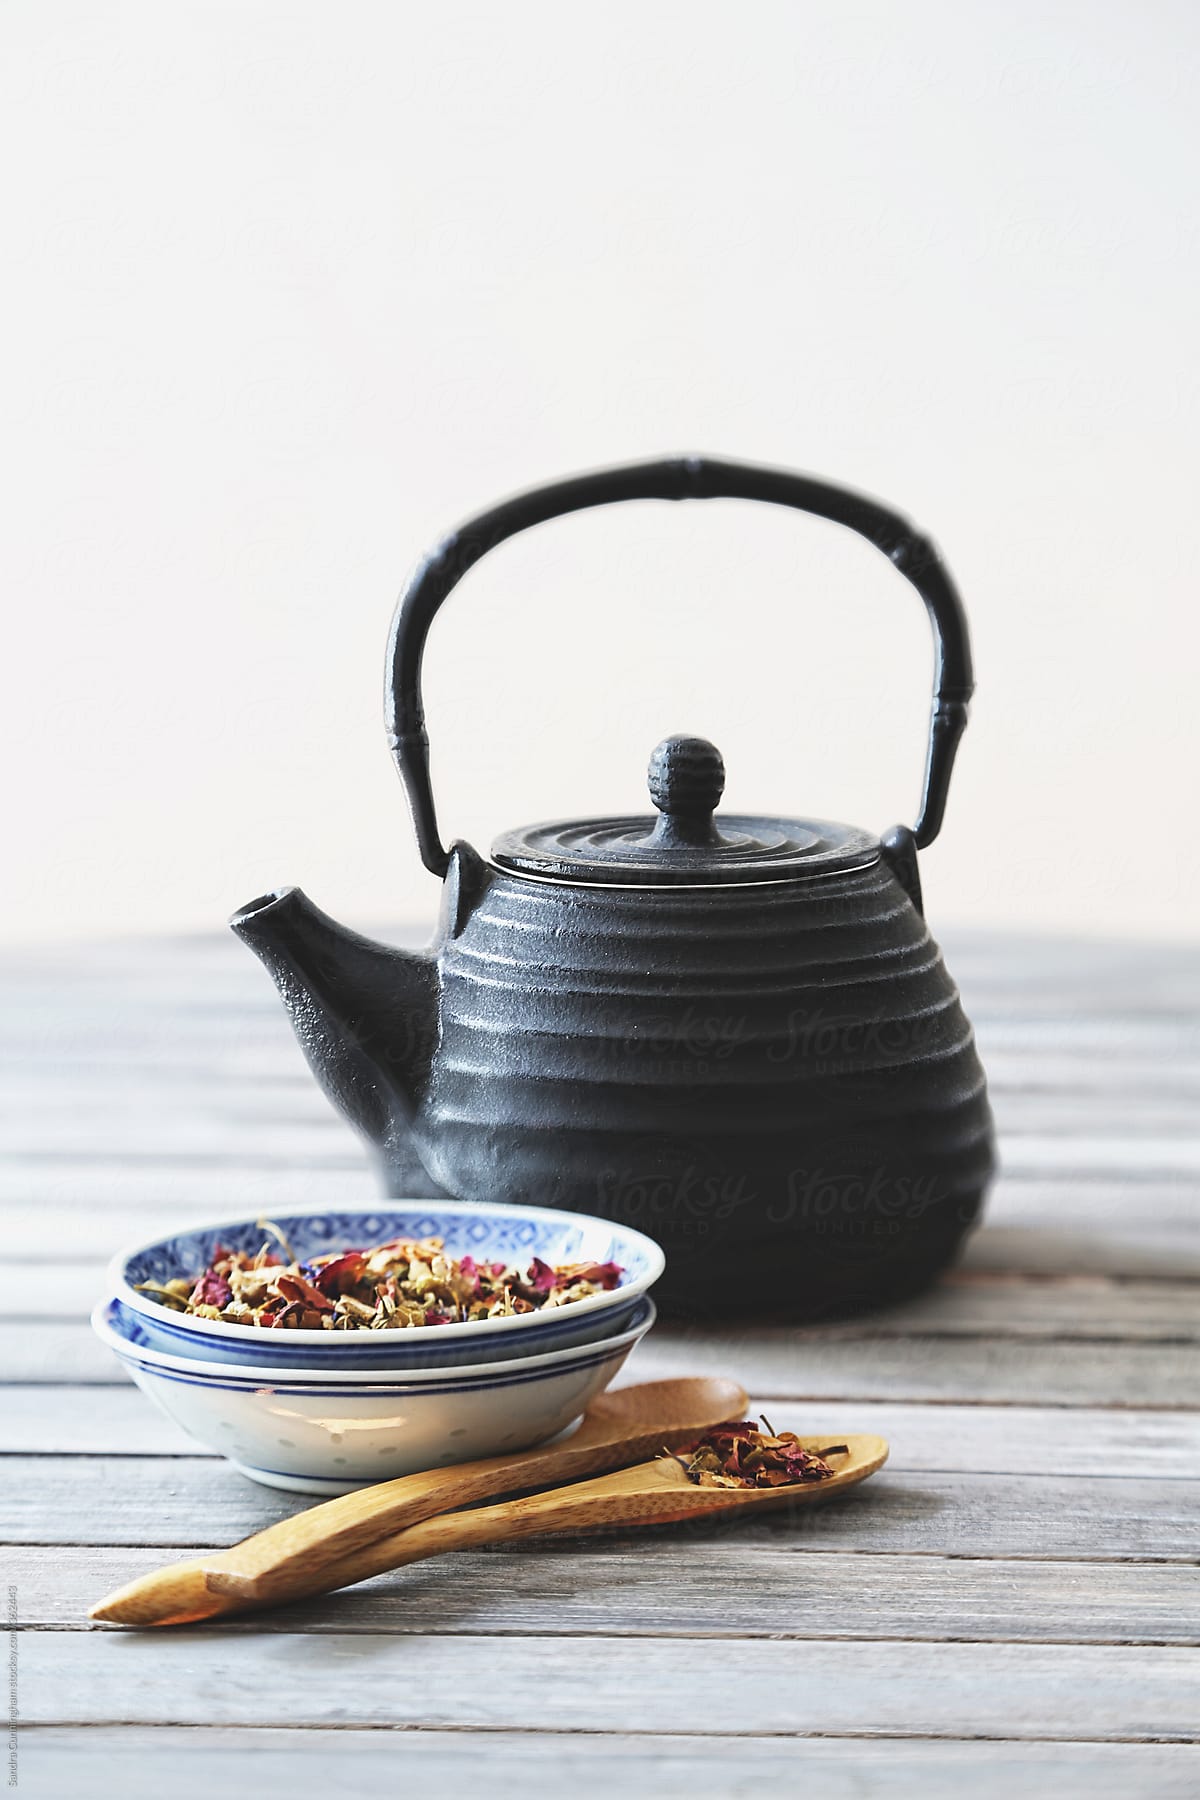 Teapot with loose herbal tea leaves